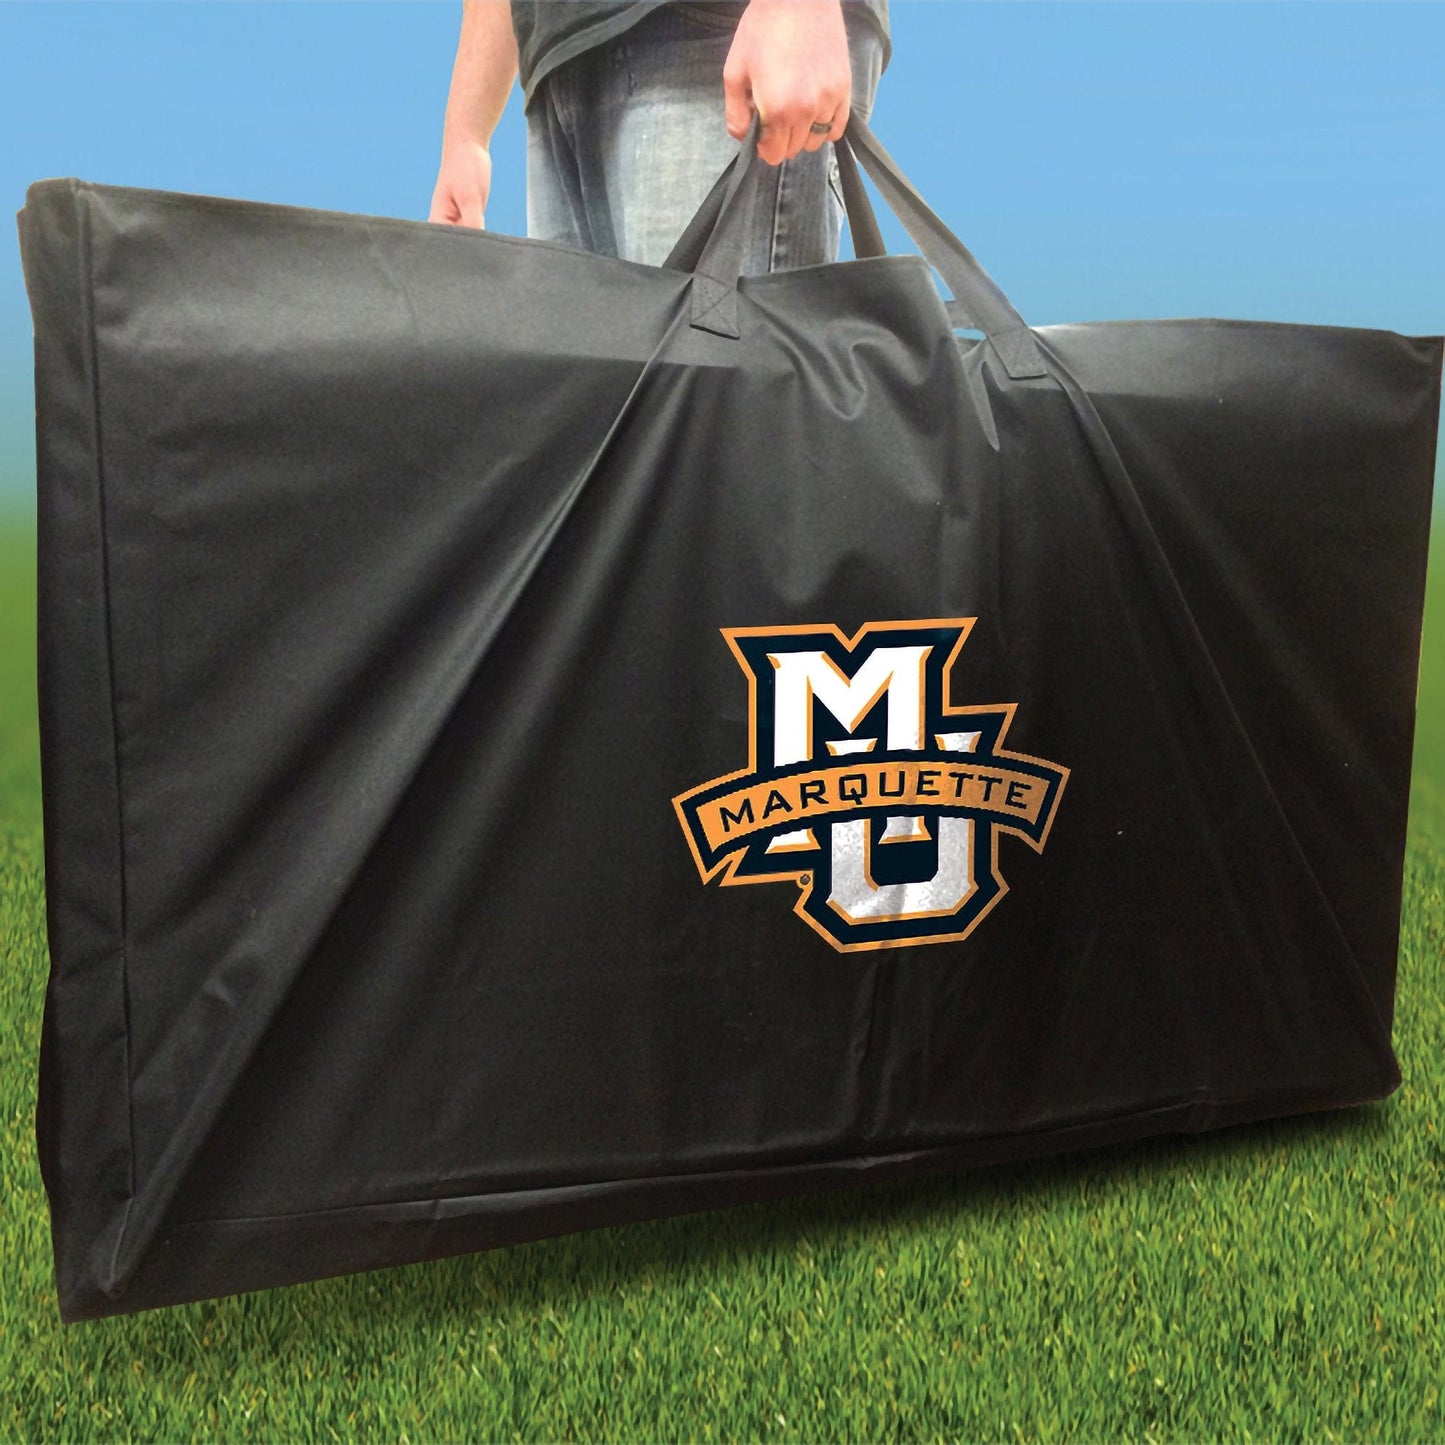 Marquette Stripe team logo carrying case